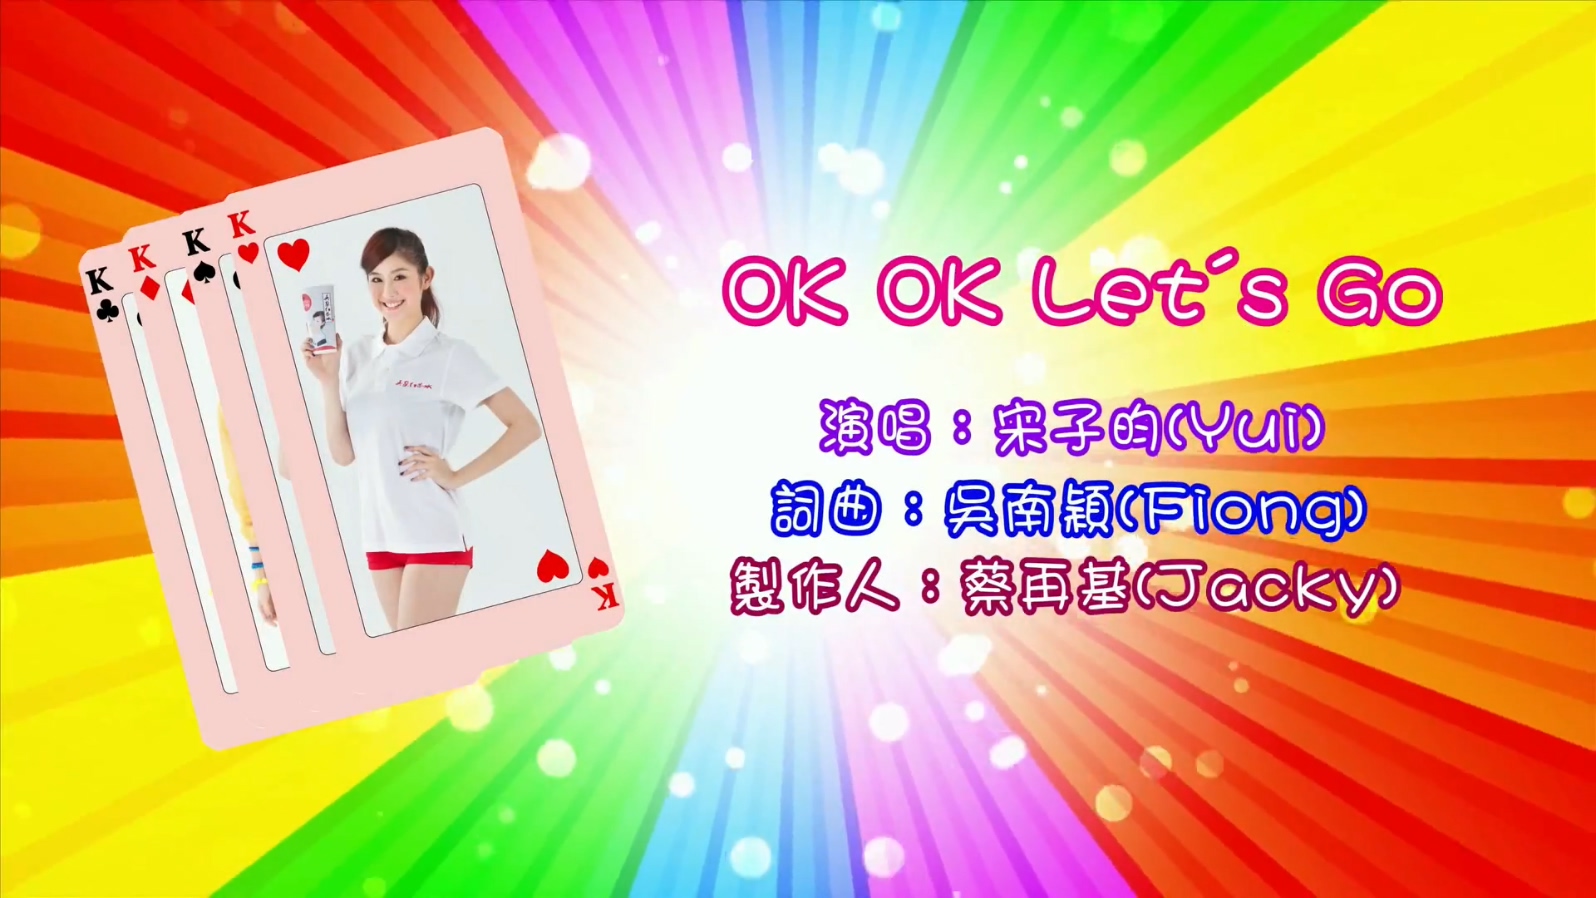 宋子昀 - OK OK LET*S GO - 1080P